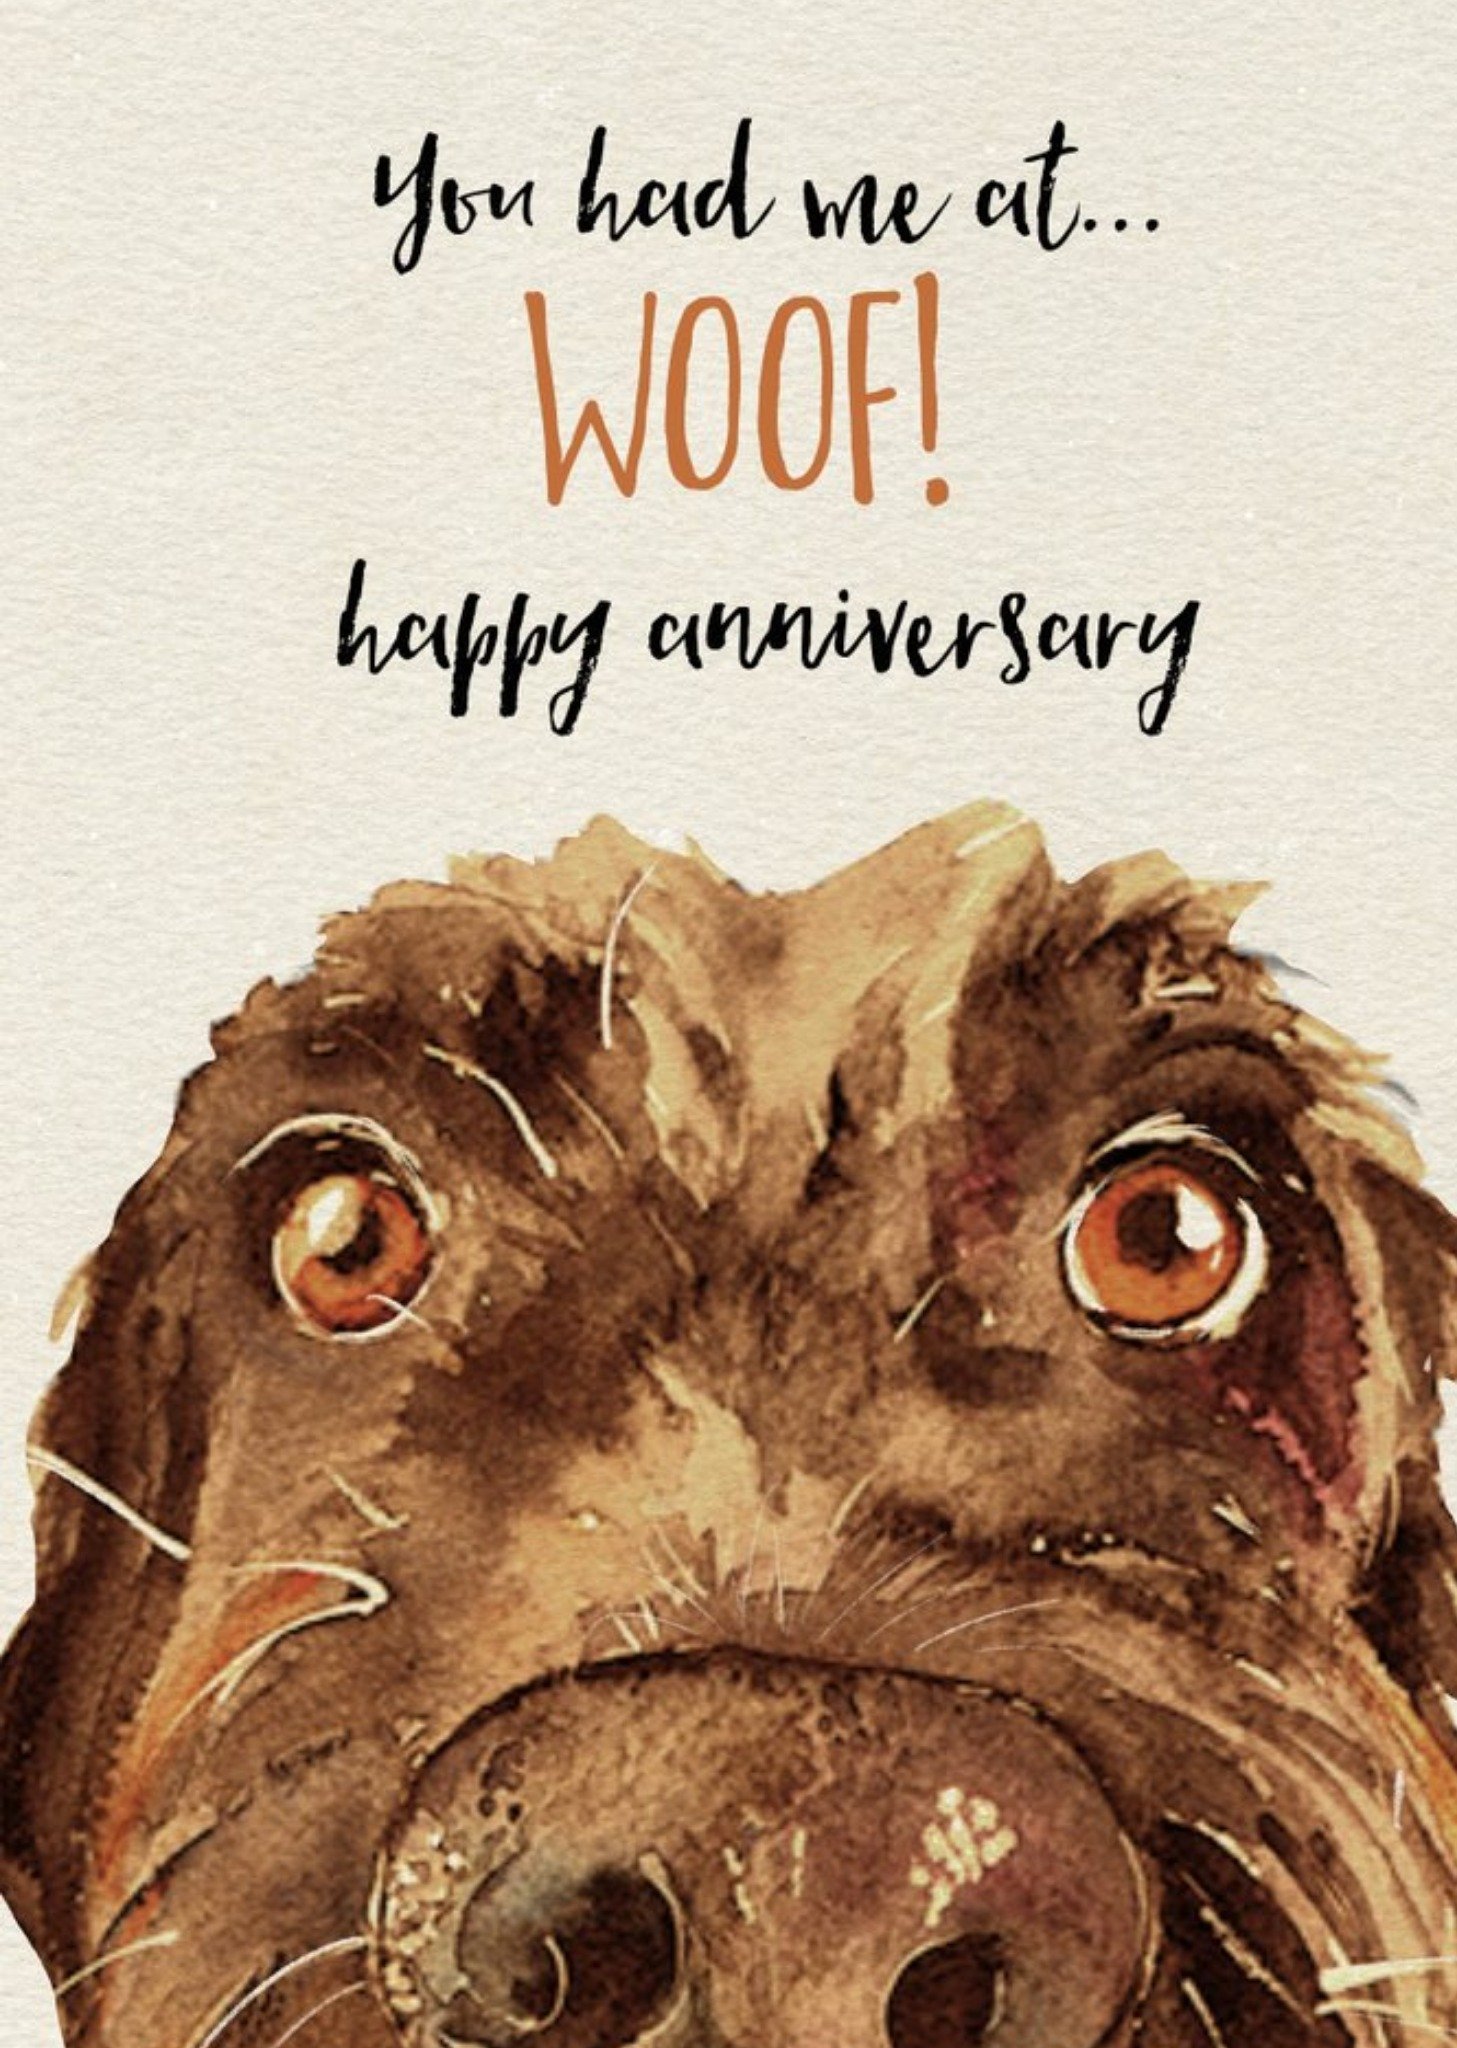 Moonpig Cute Dog Watercolour Illustration You Had Me At Woof Anniversary Card Ecard